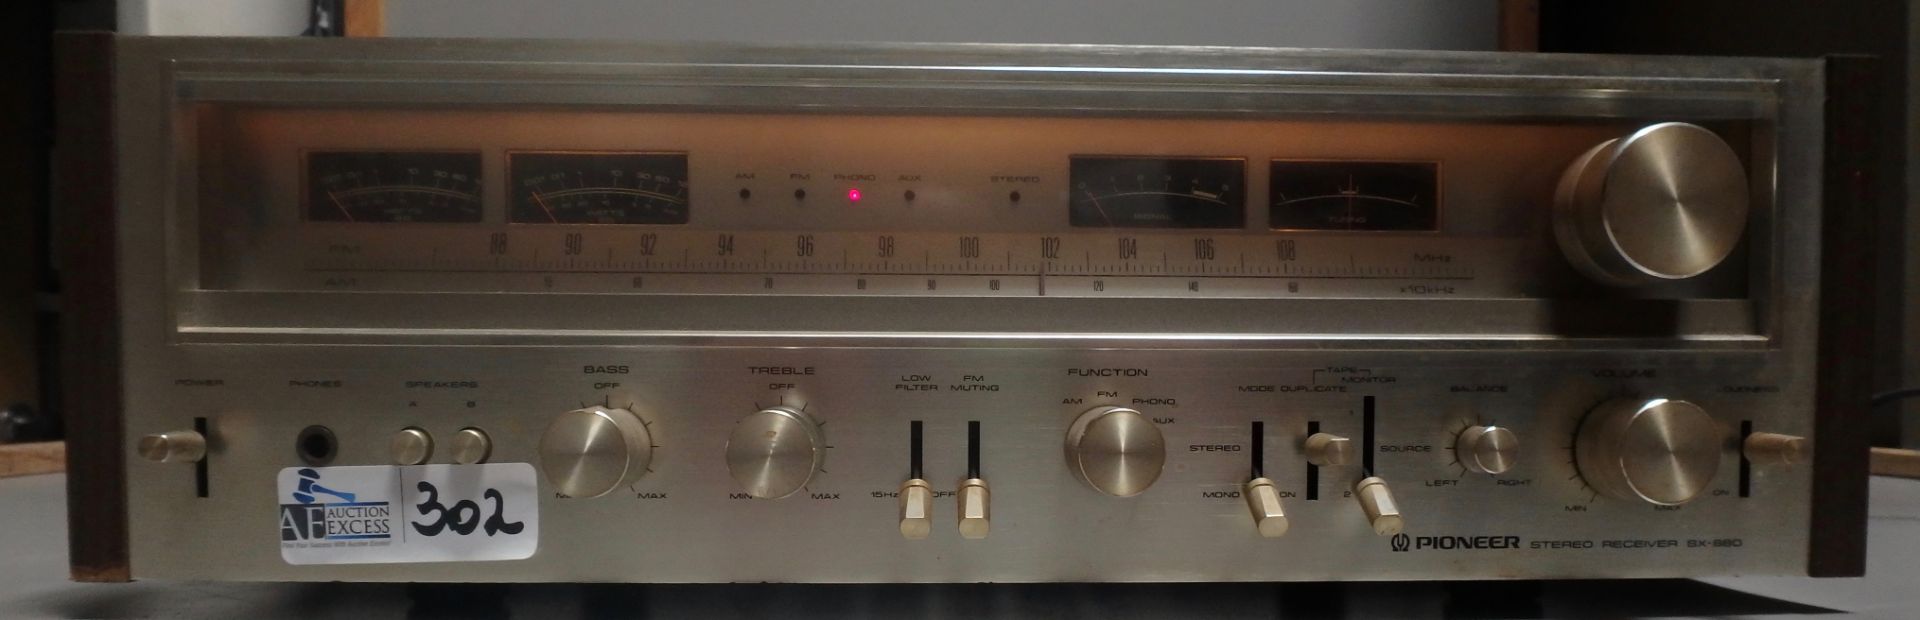 VINTAGE PIONEER SX-880 AM/FM RECEIVER